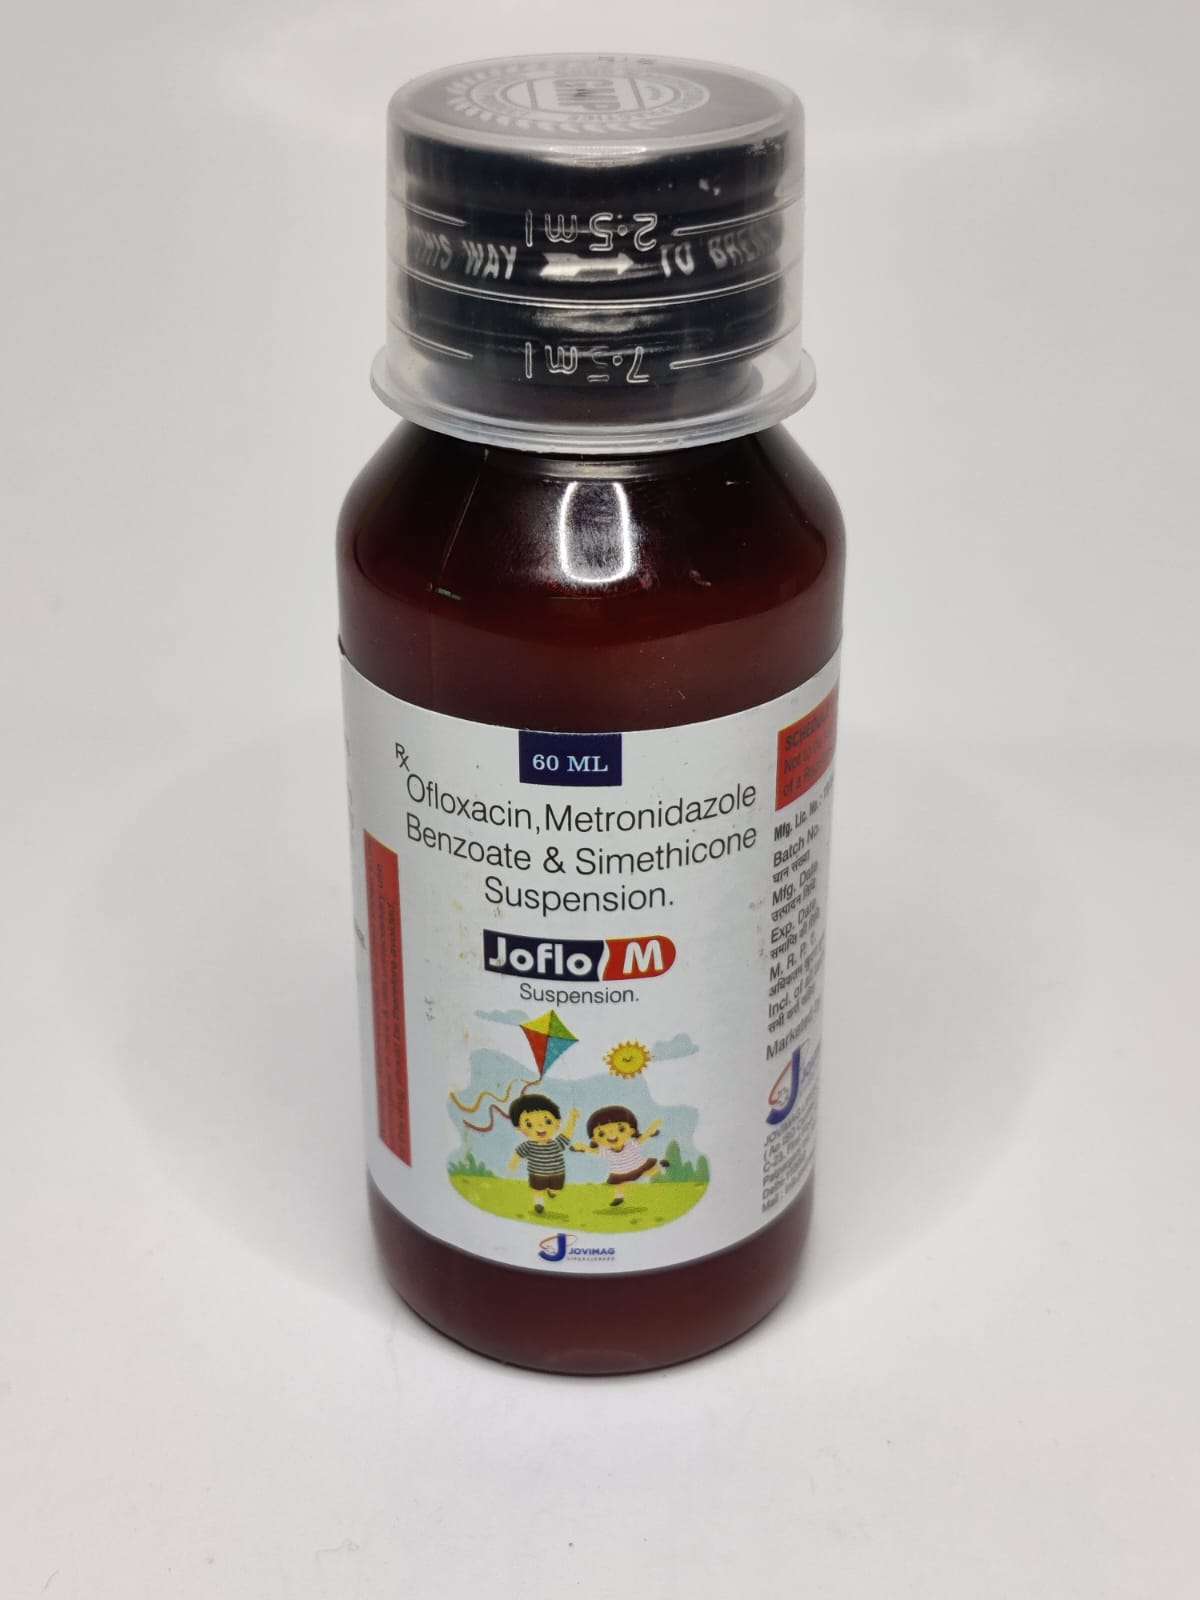 ofloxacin 50 mg+ metronidazole benzorate 120 mg + simethicone 10 mg